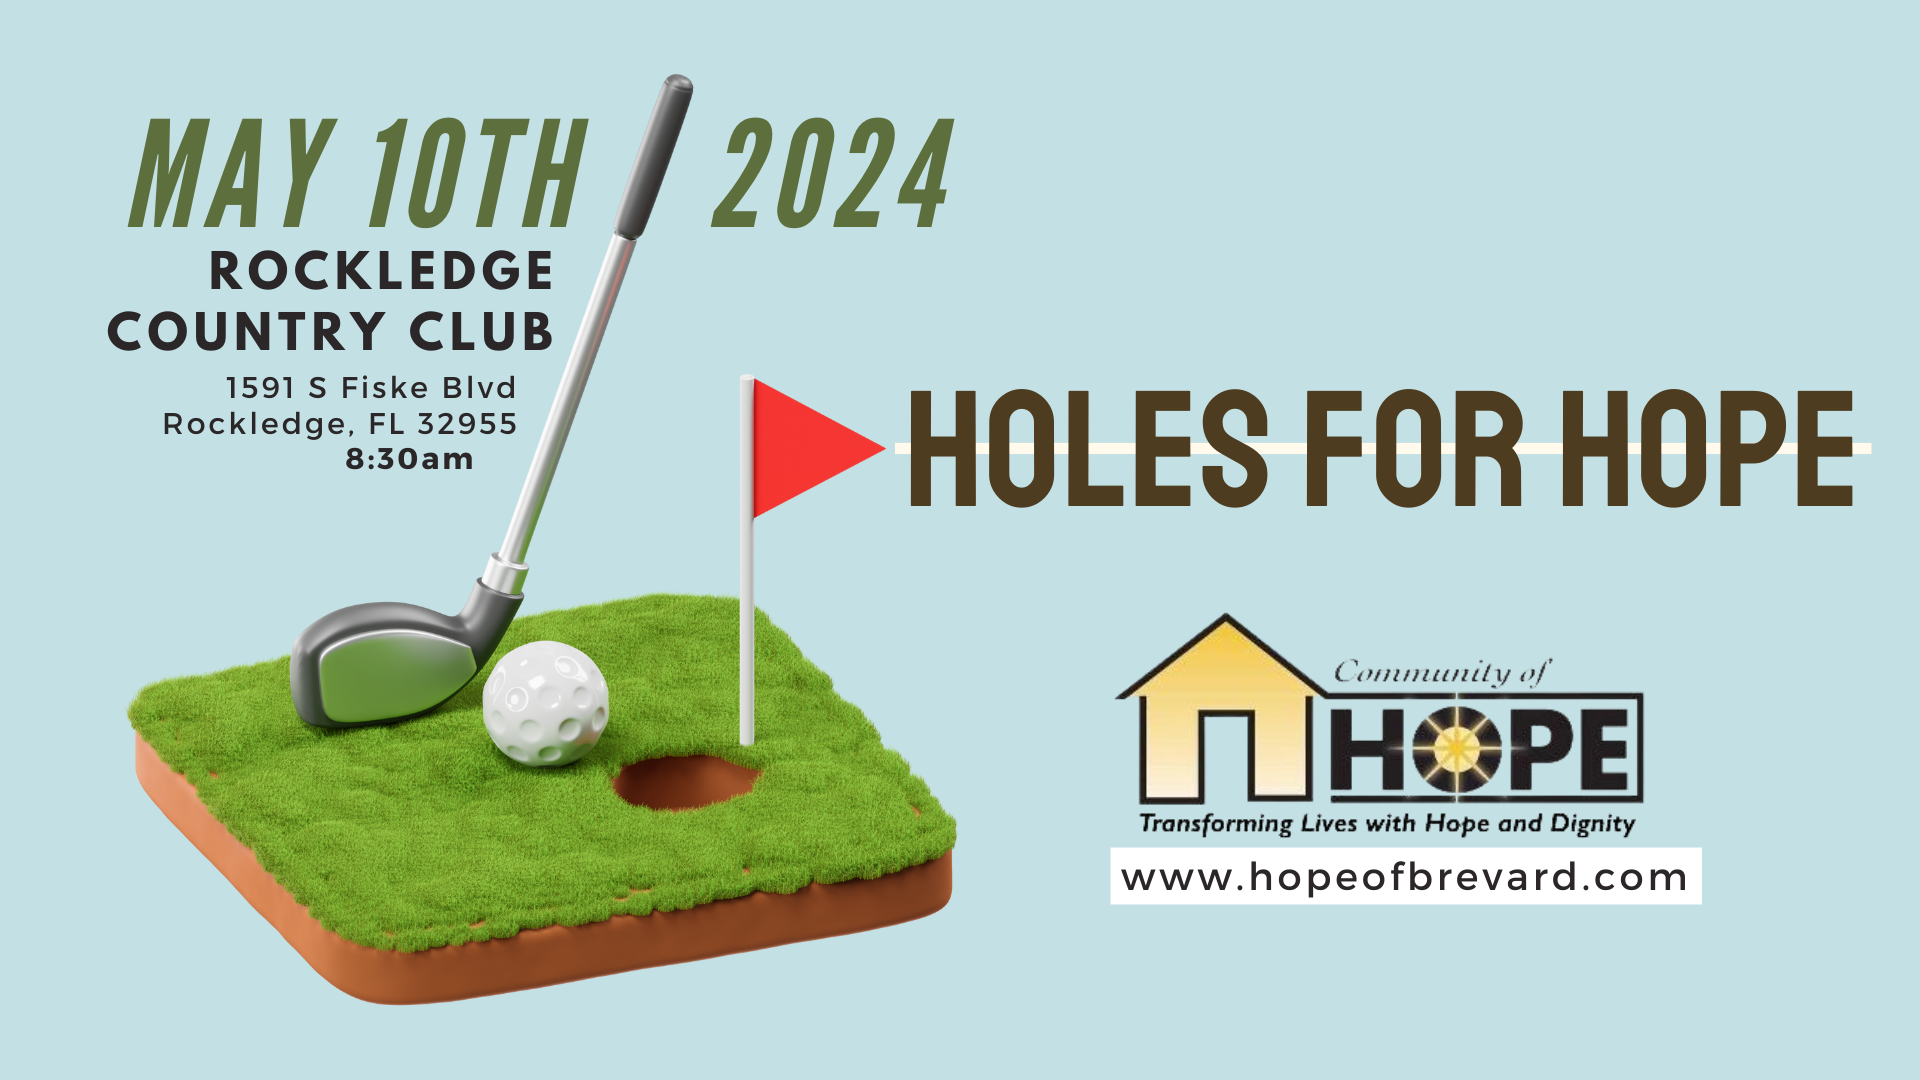 Holes for Hope, Community of Hope Golf Tournament fundraiser for homeless families